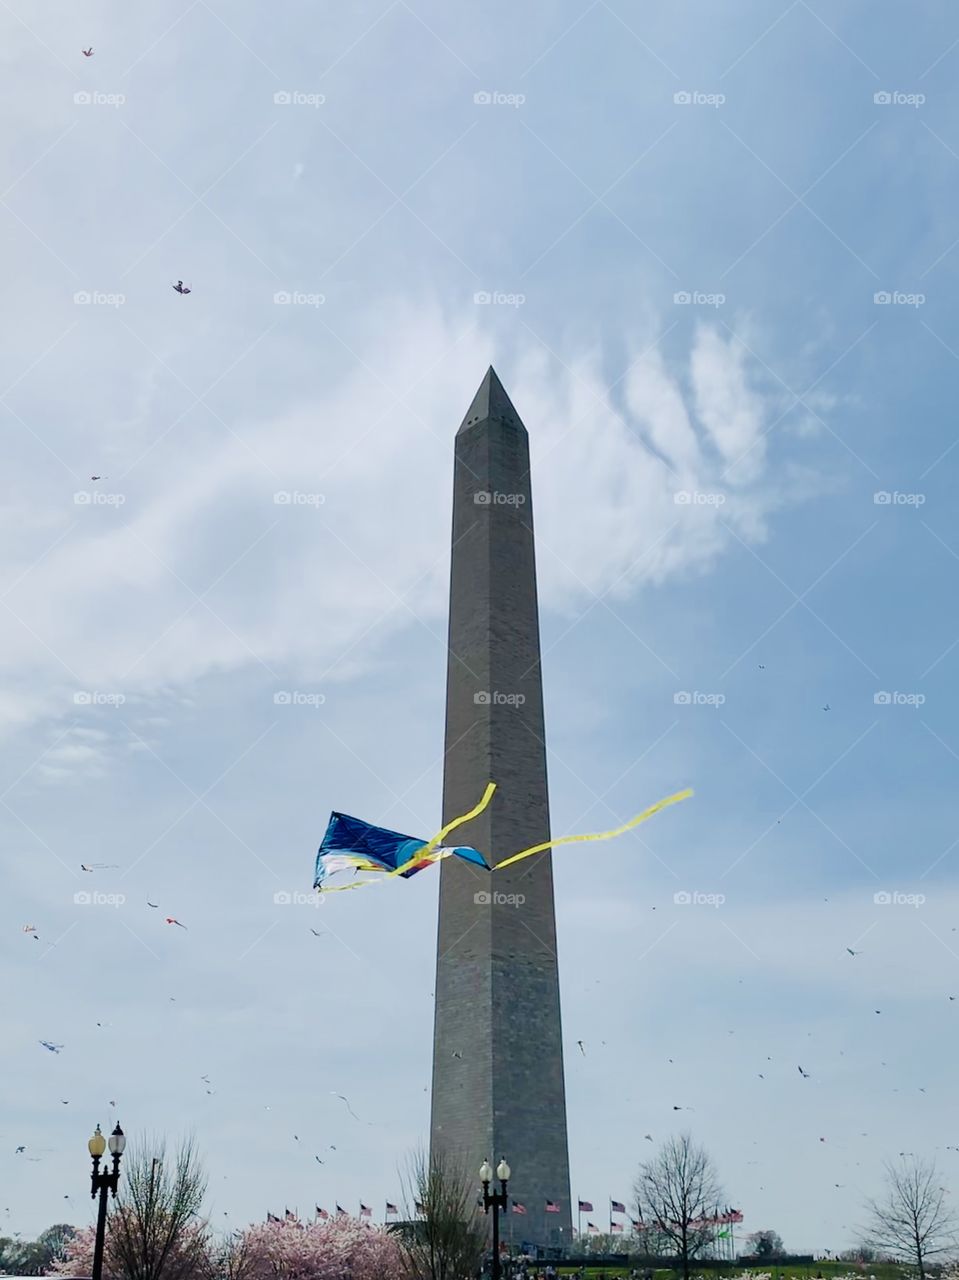 Kite festival in Washington DC 